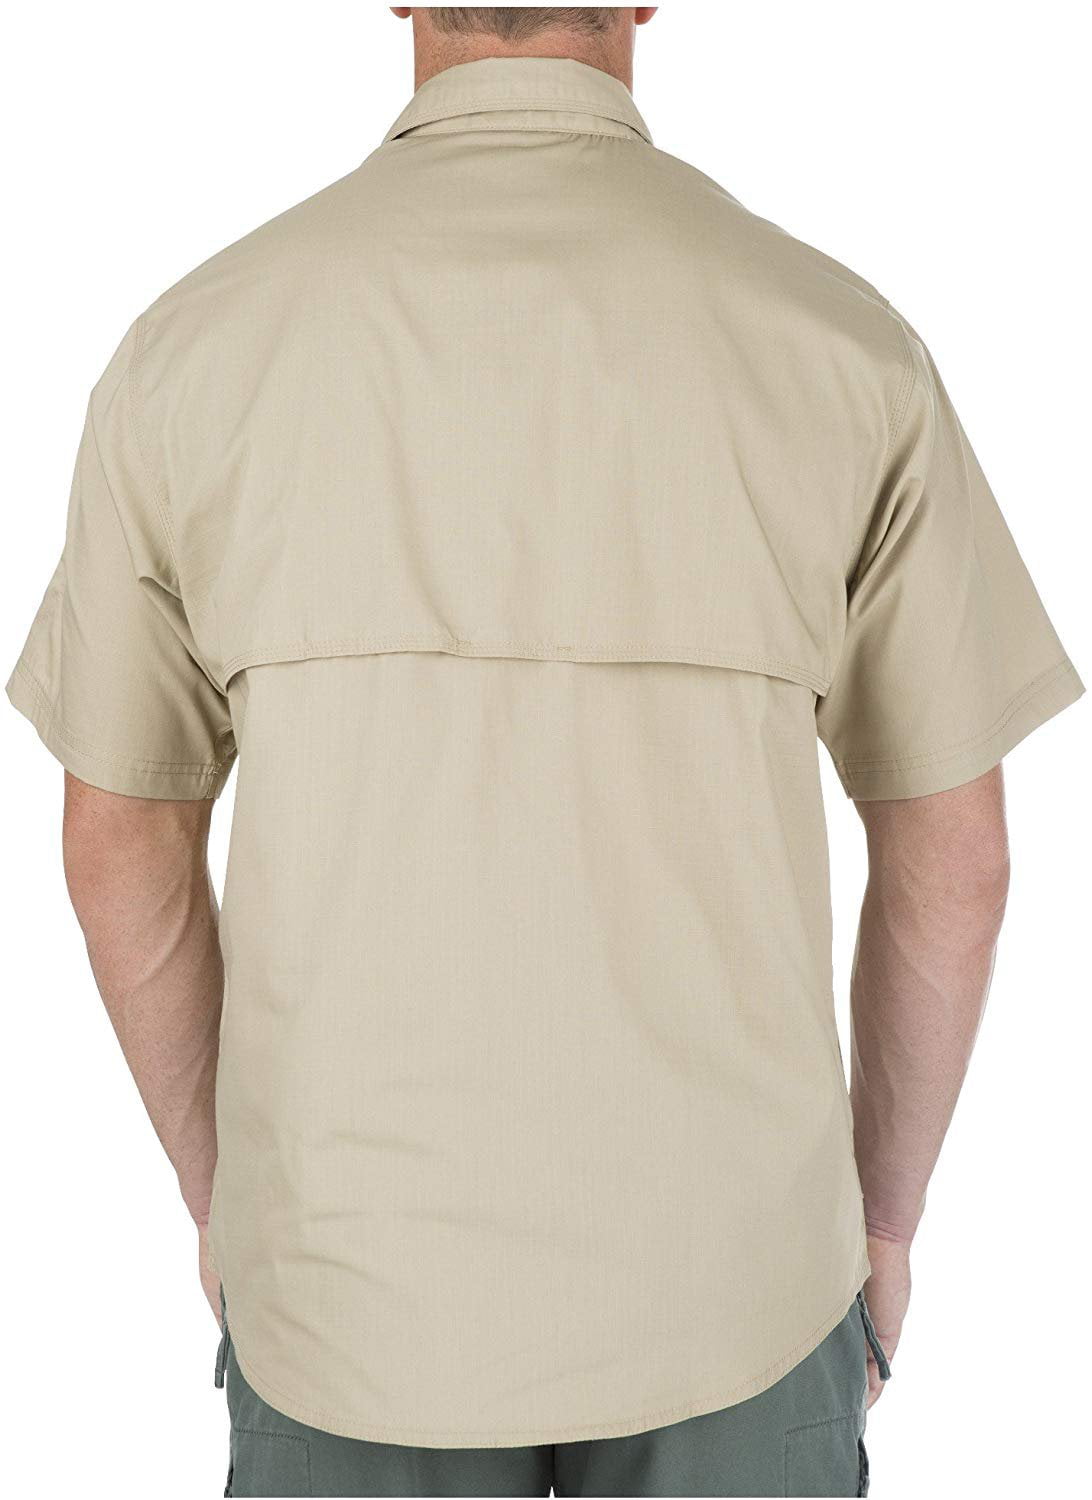 71175T 5.11 Tactical TacLite Pro Short Sleeve Shirt 71175 